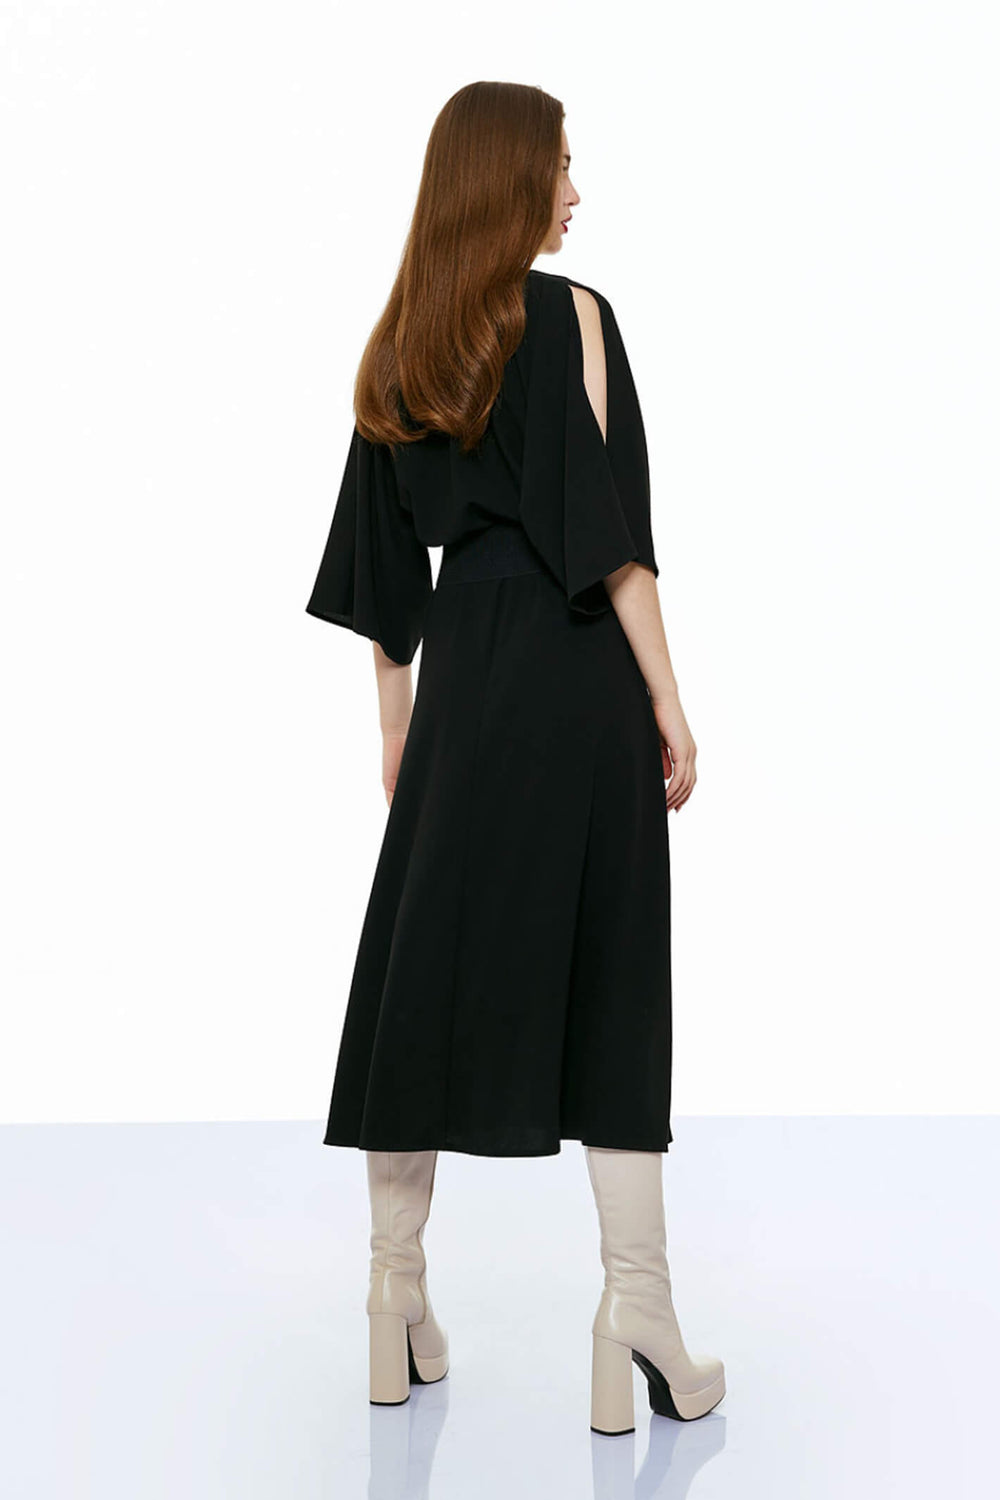 Access Fashion 3350 Black Split Sleeve Midi Wrap Dress - Experience Boutique